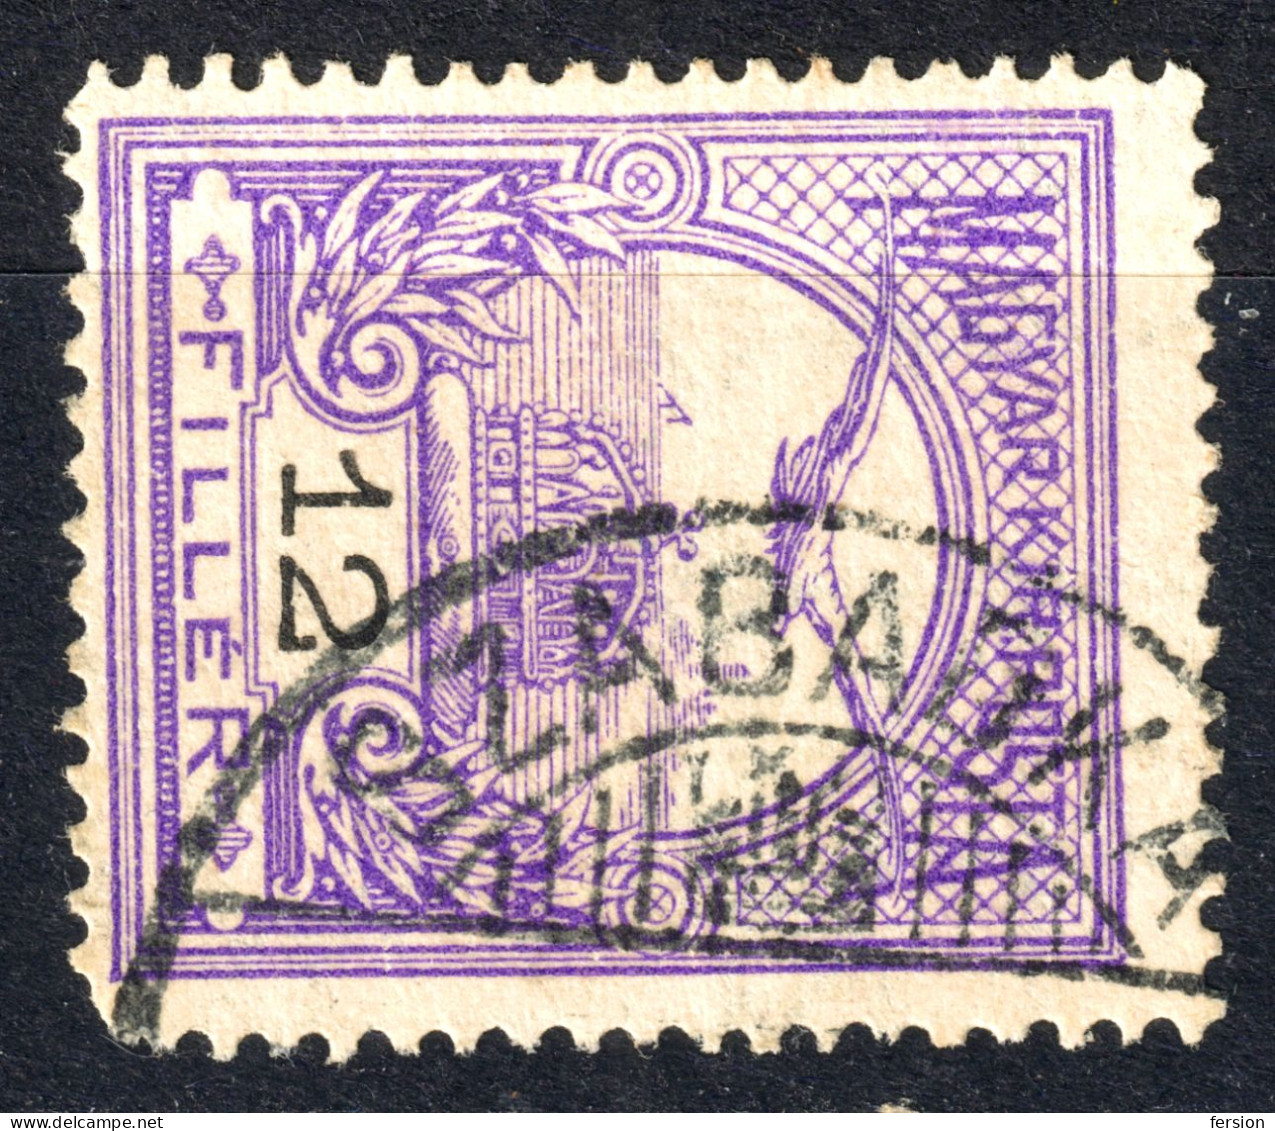 SZABADKA Subotica Postmark TURUL Crown 1910's Hungary SERBIA Vojvodina Bačka BÁCS BODROG County KuK - 12 Fill - Prephilately